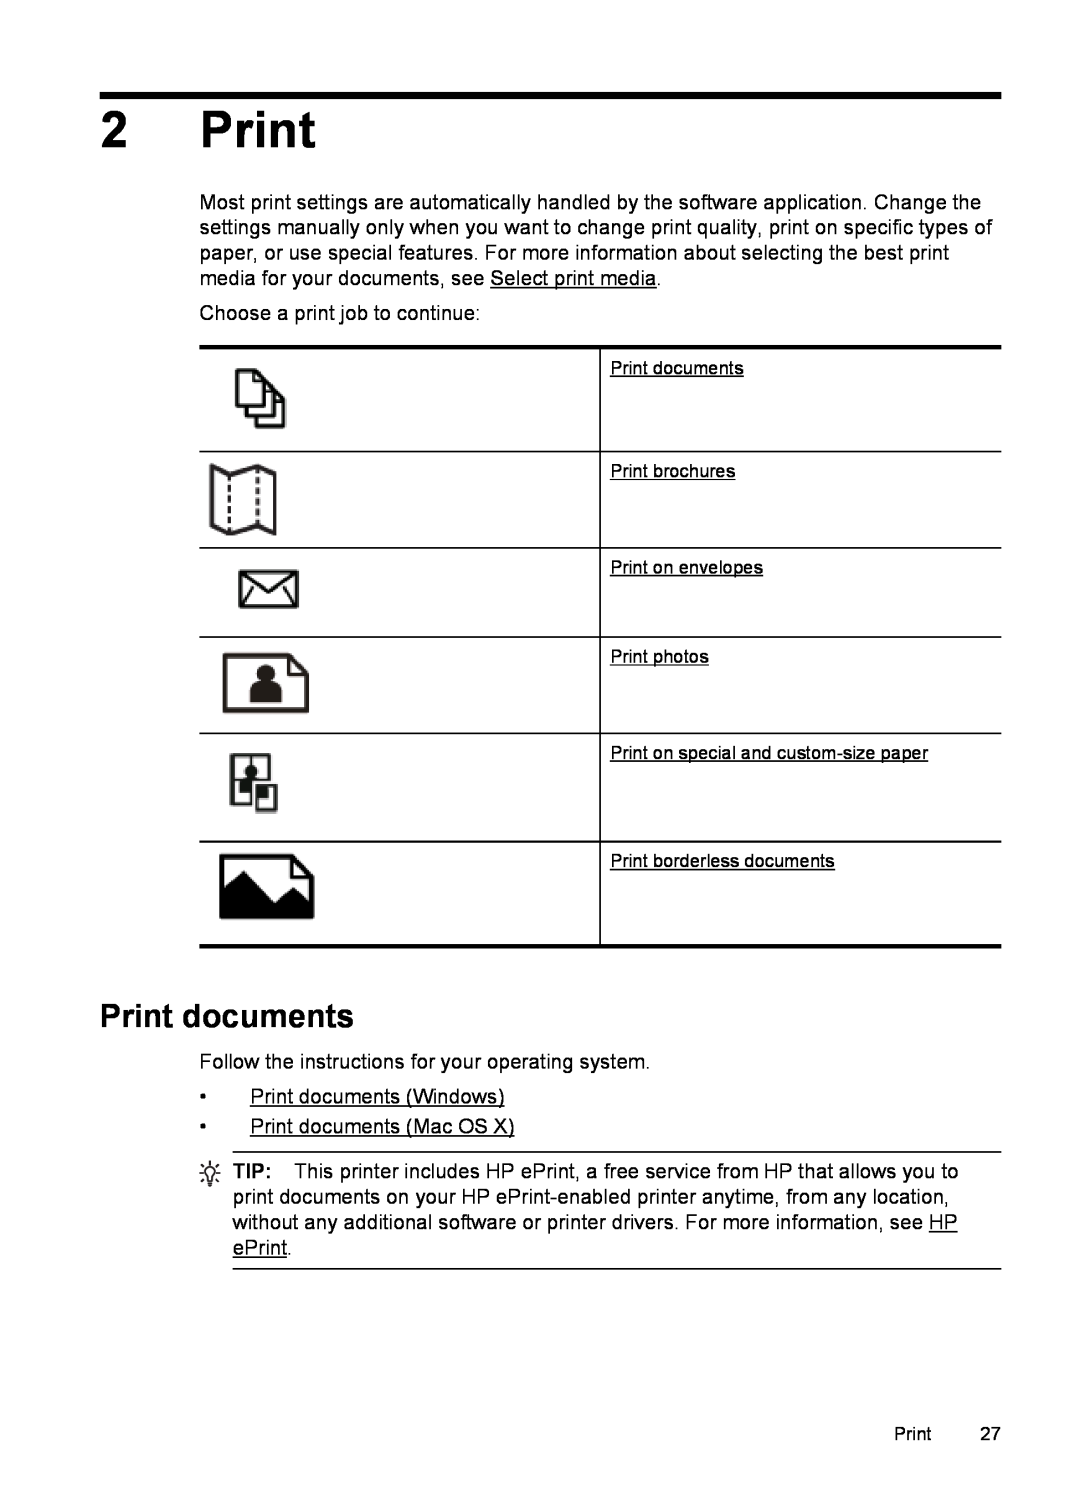 HP 6600 - H7 manual Print documents 